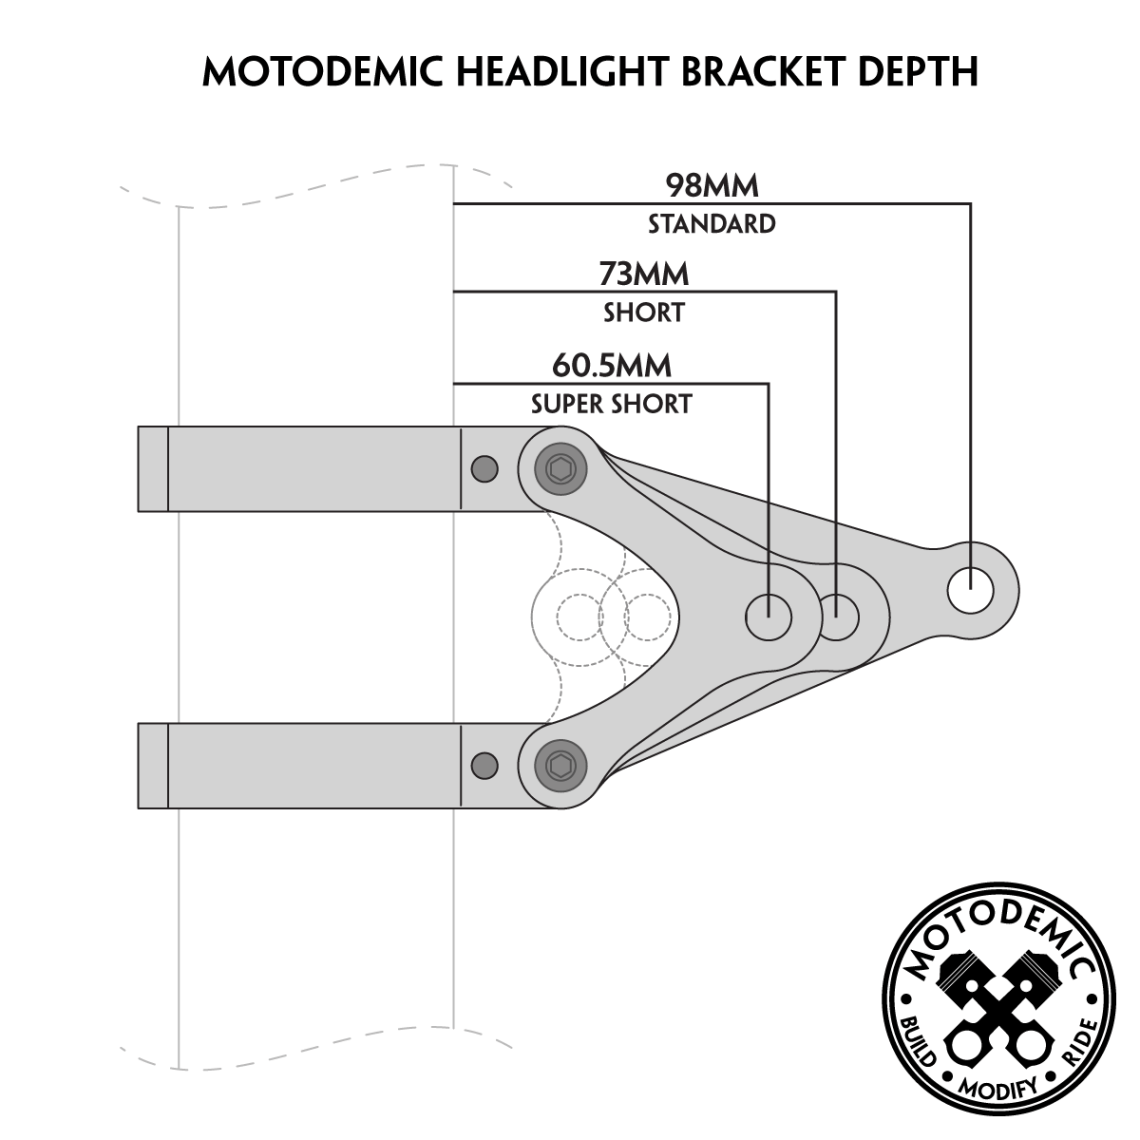 50mm MOTODEMIC Headlight Brackets